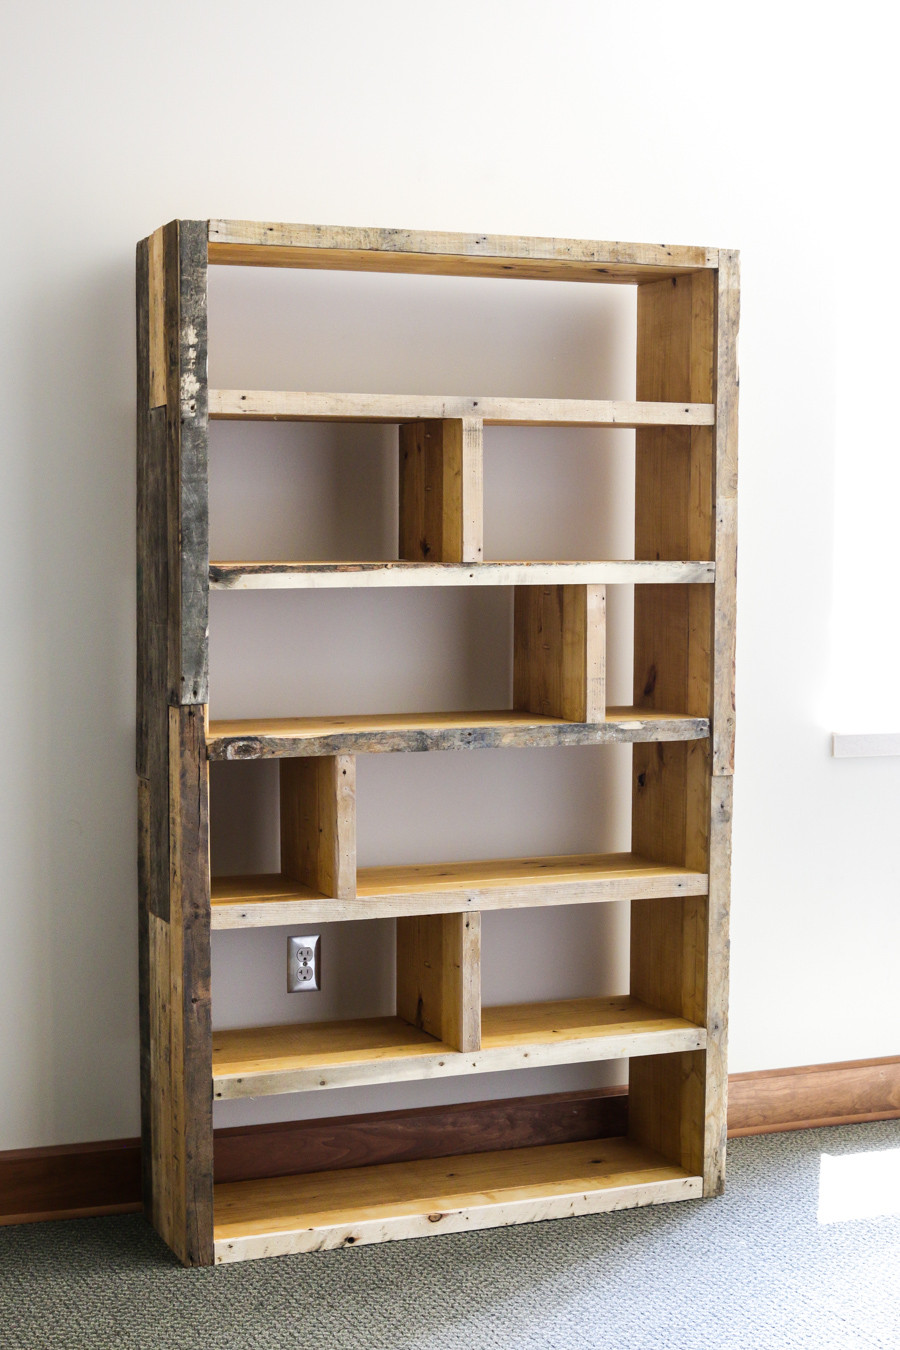 Best ideas about DIY Pallet Bookshelf
. Save or Pin DIY Rustic Pallet Bookshelf Now.